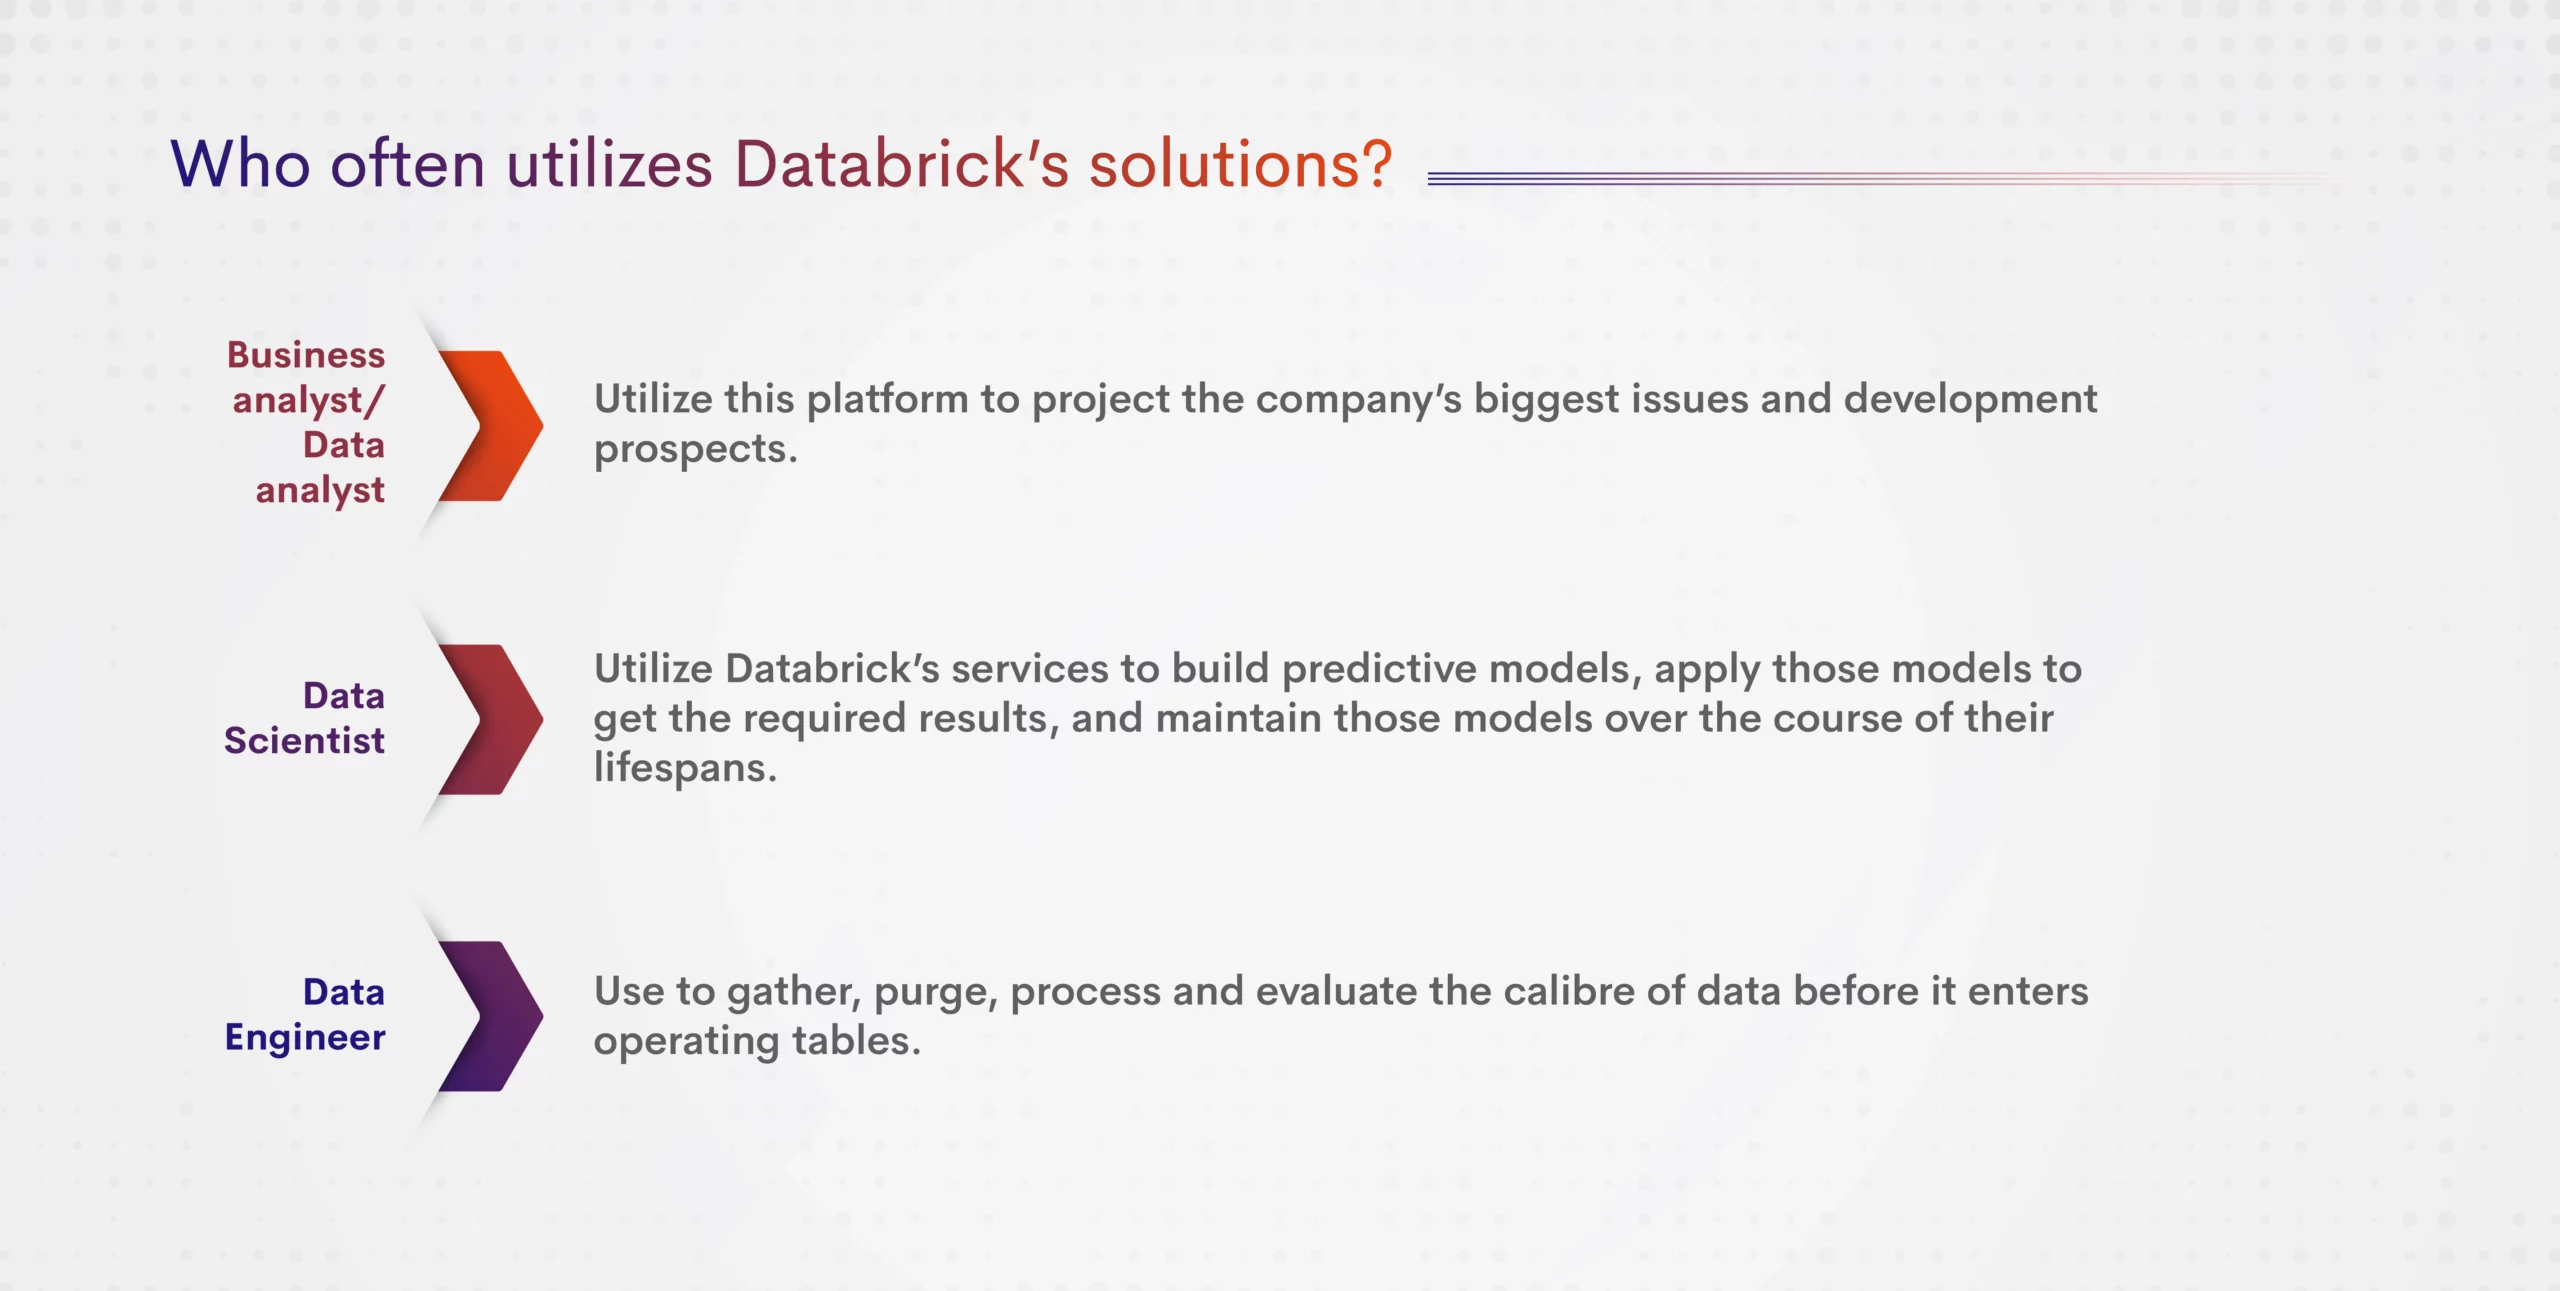 Who often utilizes Databricks' solutions